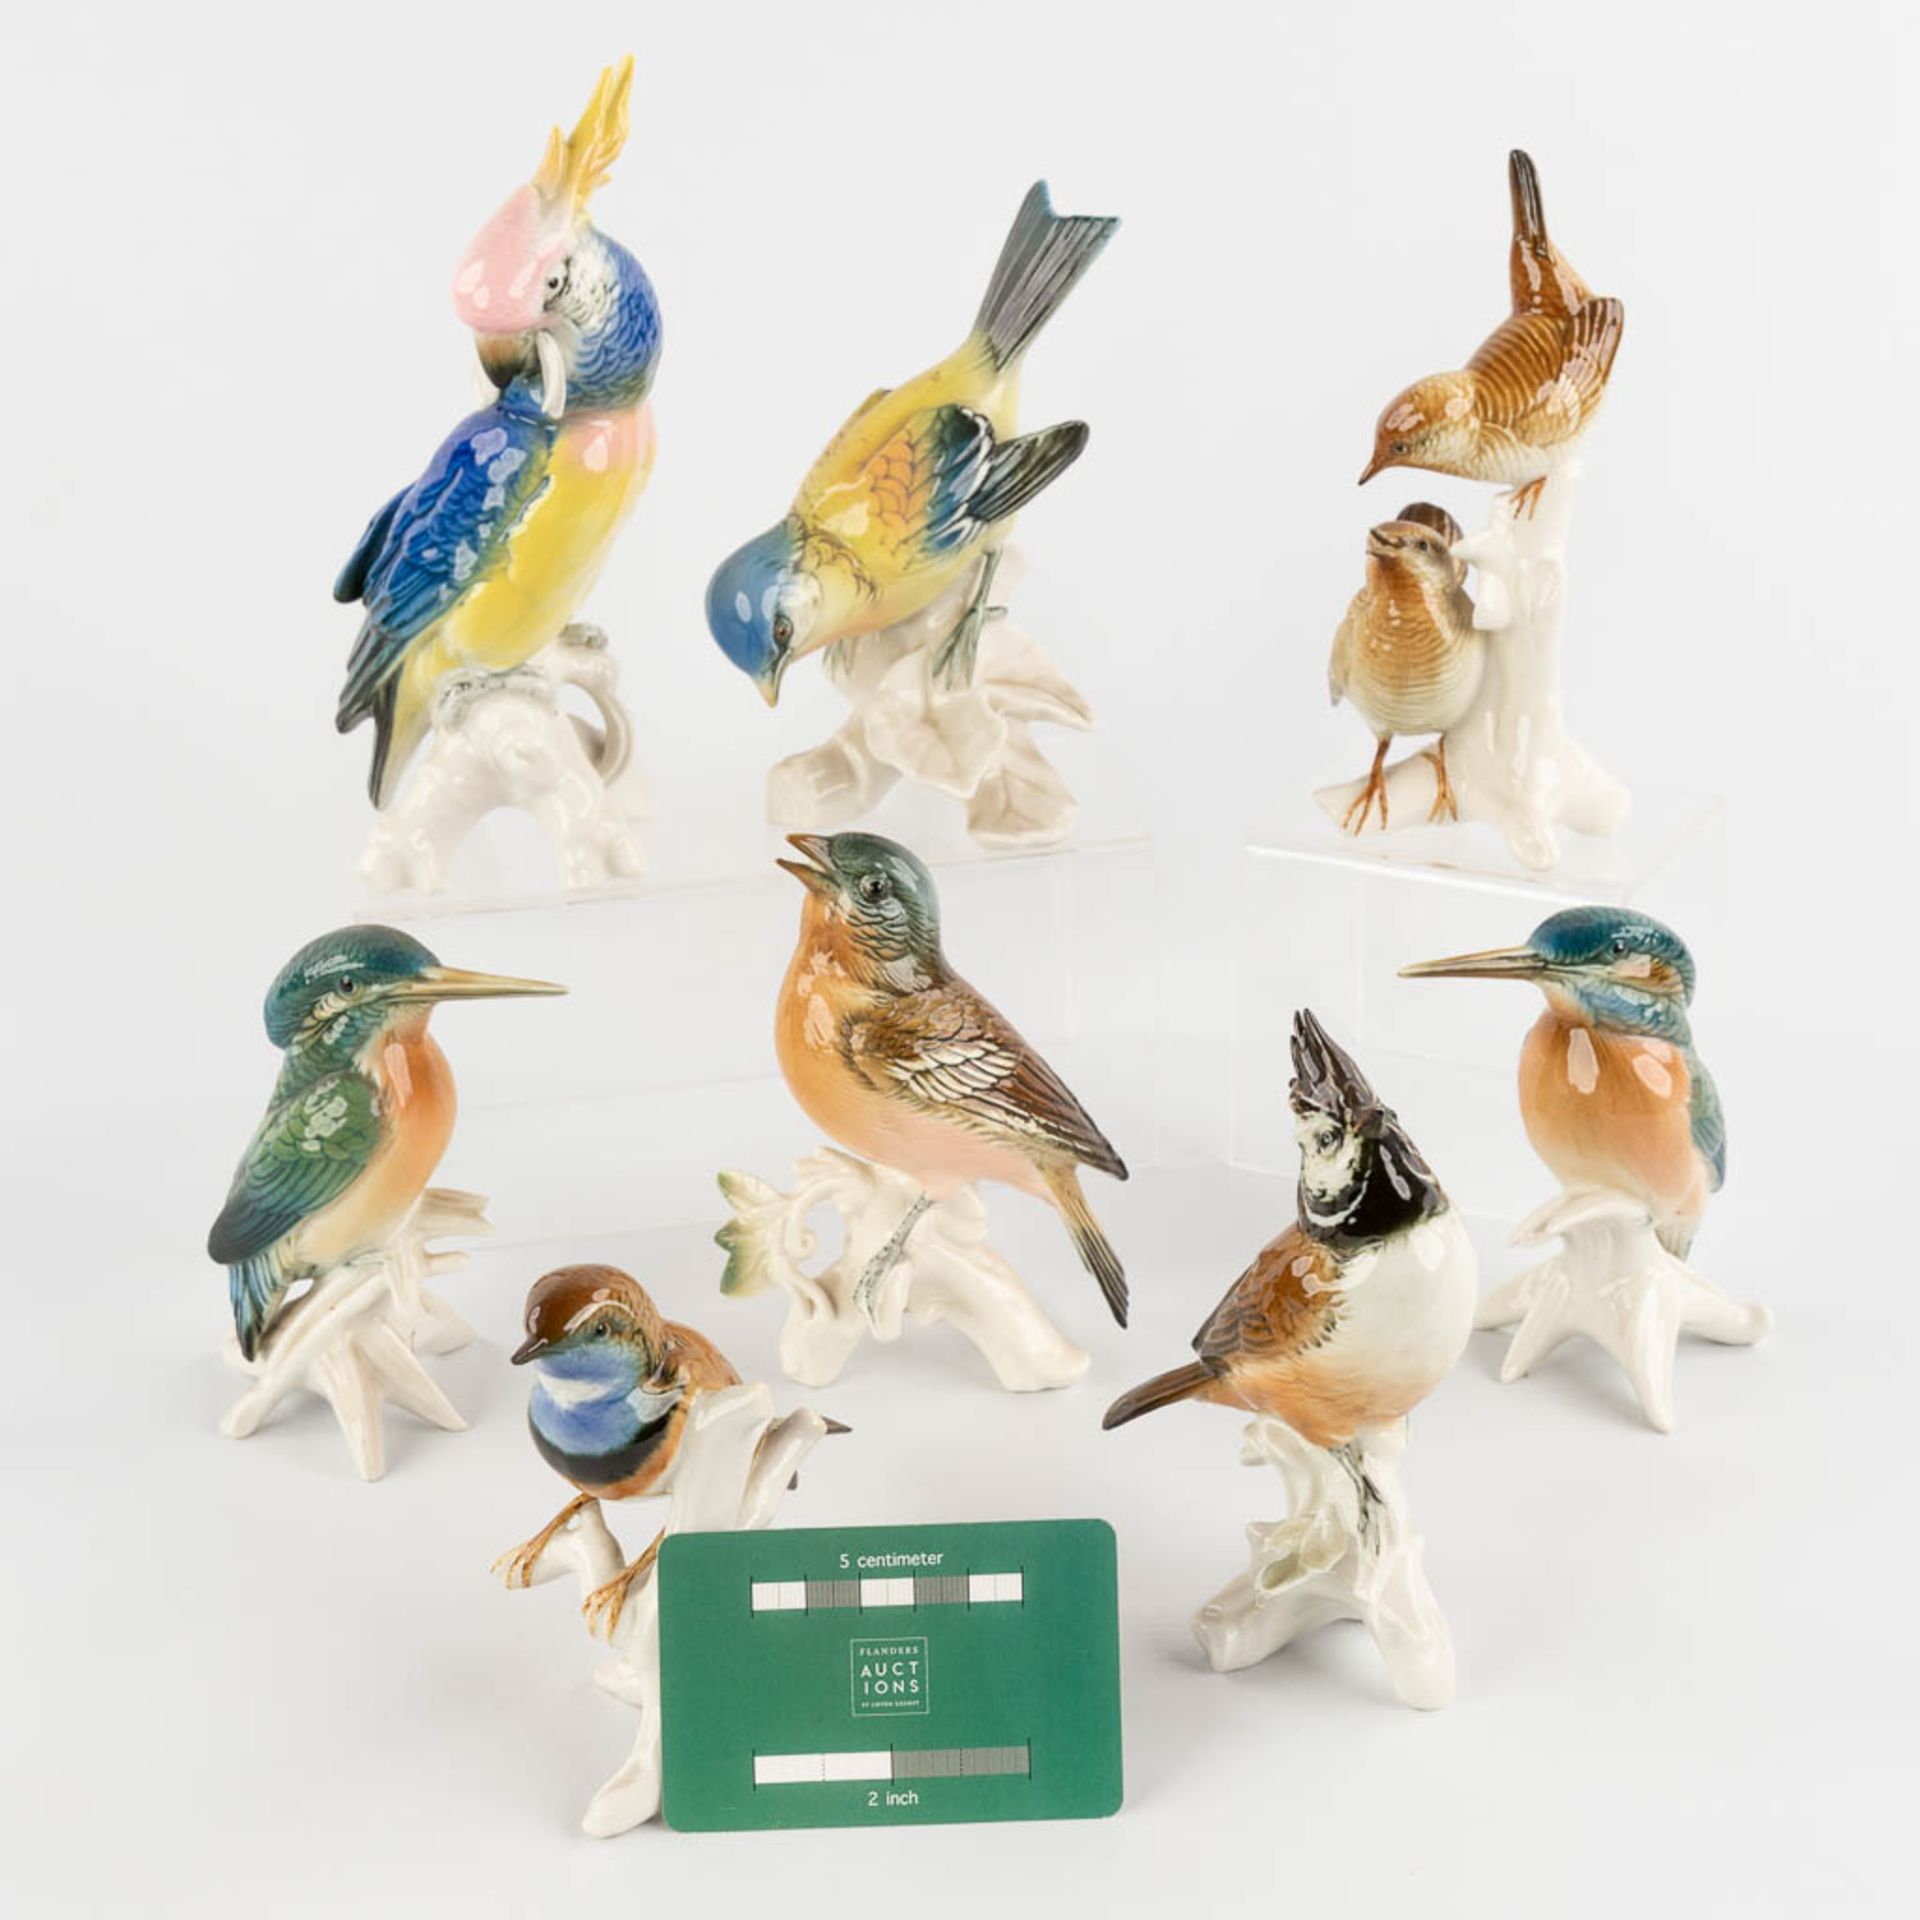 Karl ENS Porzellan, 8 birds, polychrome porcelain. 20th C. (H:19 cm) - Image 2 of 15